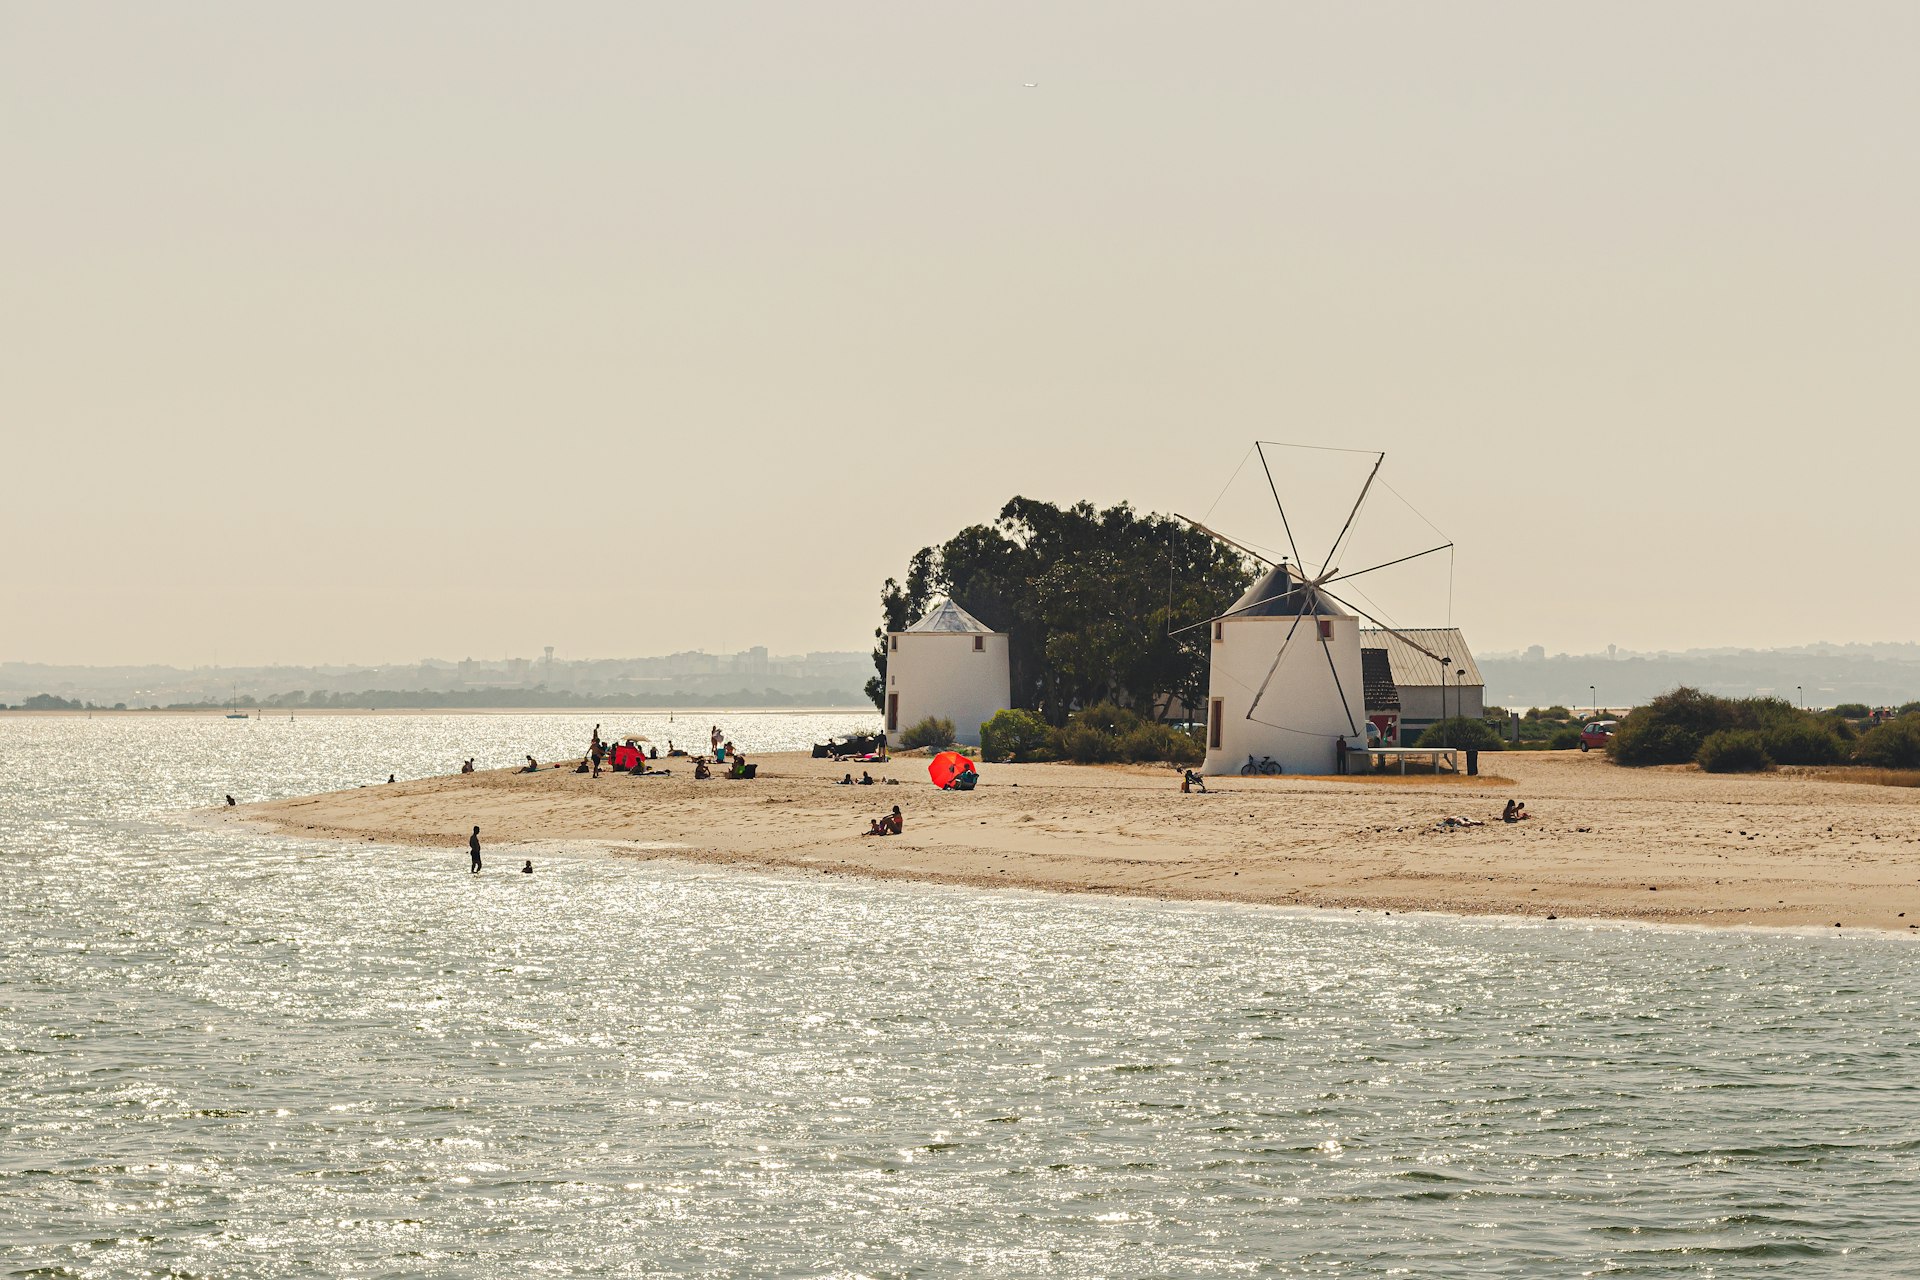 Two white stone round windmills on a sandy beach